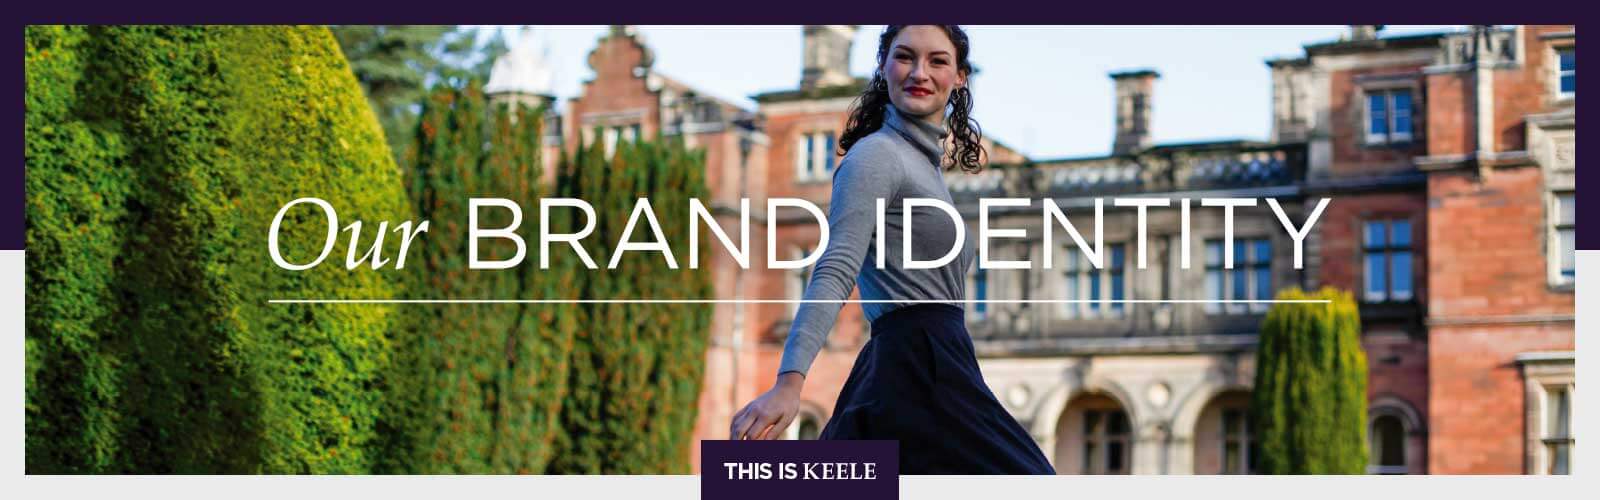 Keele University brand identity.